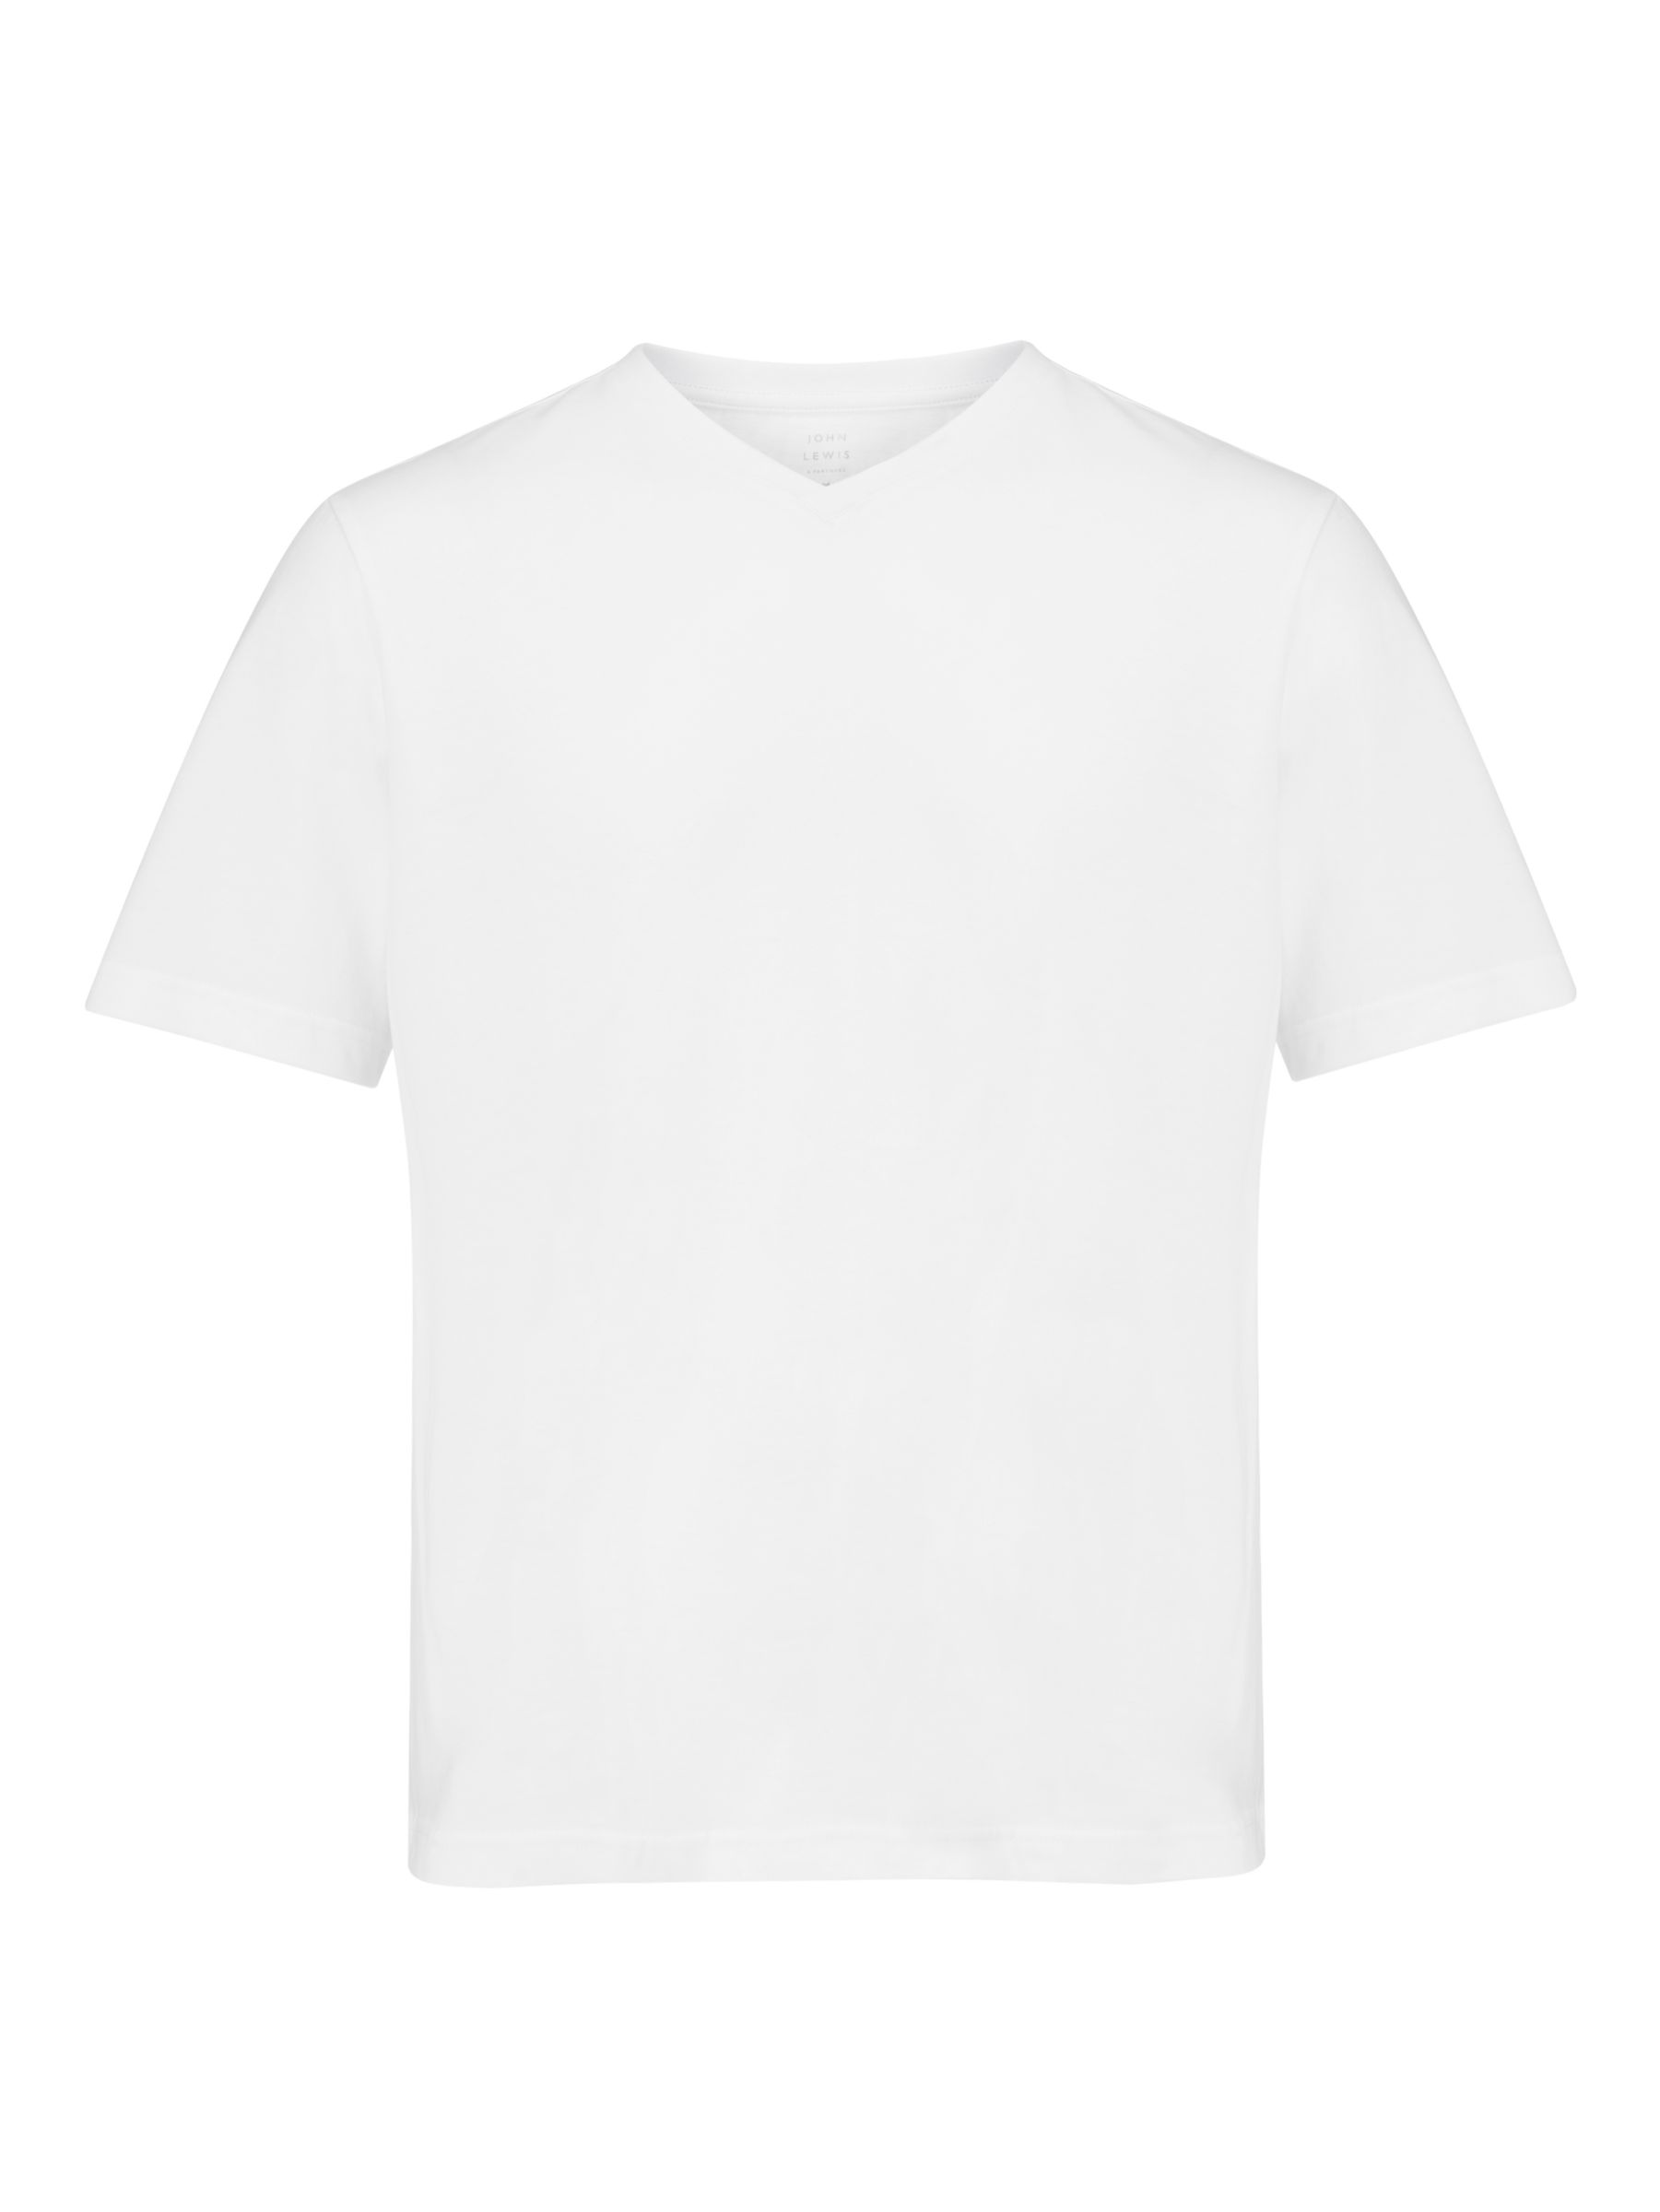 John Lewis V-Neck Organic Cotton Lounge T-Shirt, White, S